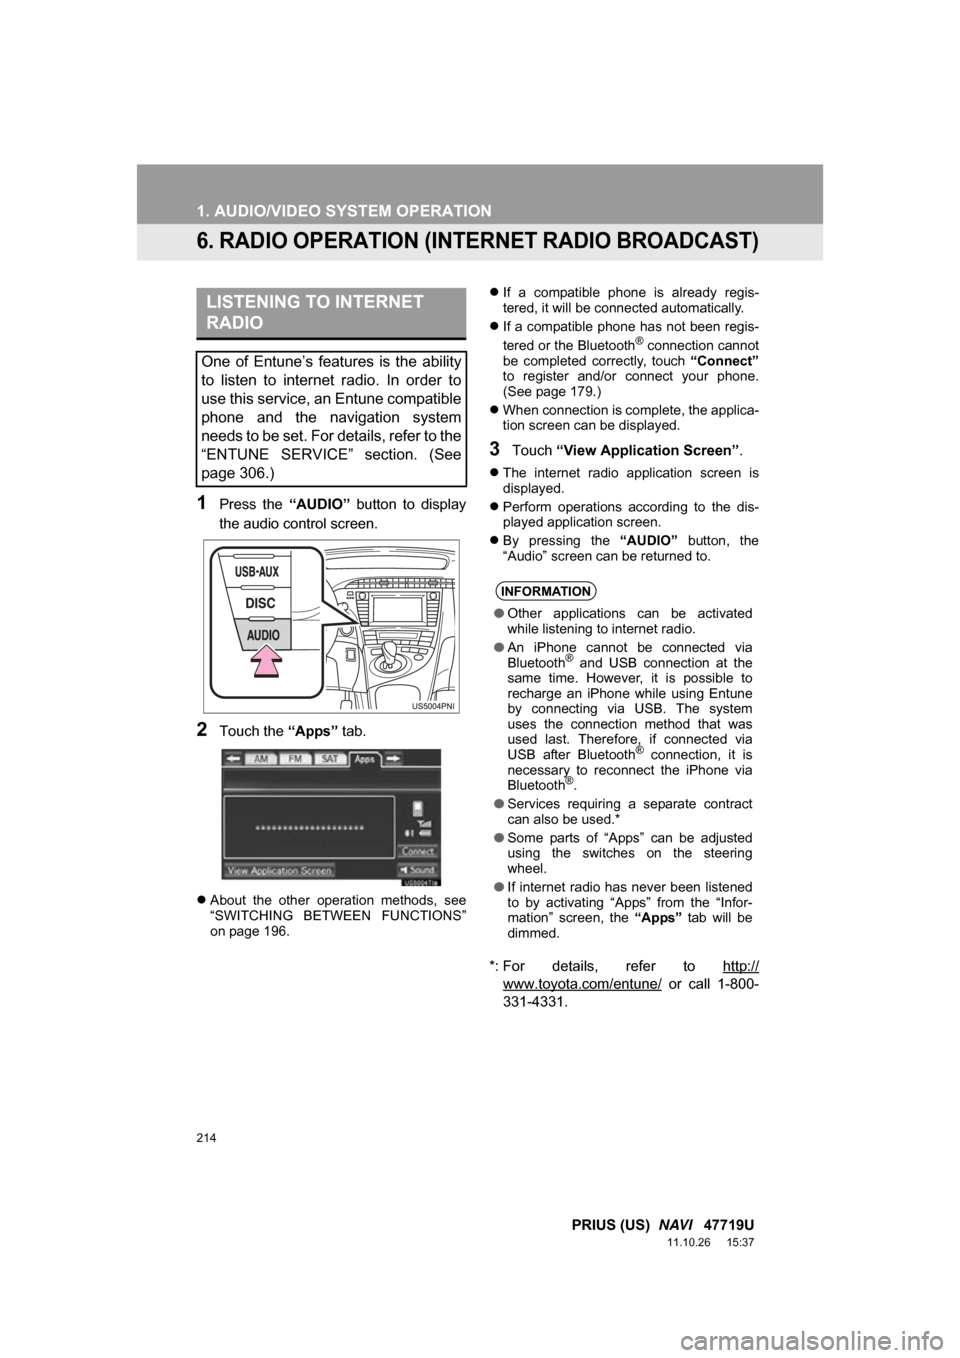 TOYOTA PRIUS 2012 3.G Navigation Manual 214
1. AUDIO/VIDEO SYSTEM OPERATION
PRIUS (US)  NAVI    47719U
11.10.26     15:37
6. RADIO OPERATION (INTERNET RADIO BROADCAST)
1Press  the “AUDIO”  button  to  display
the audio control screen.
2